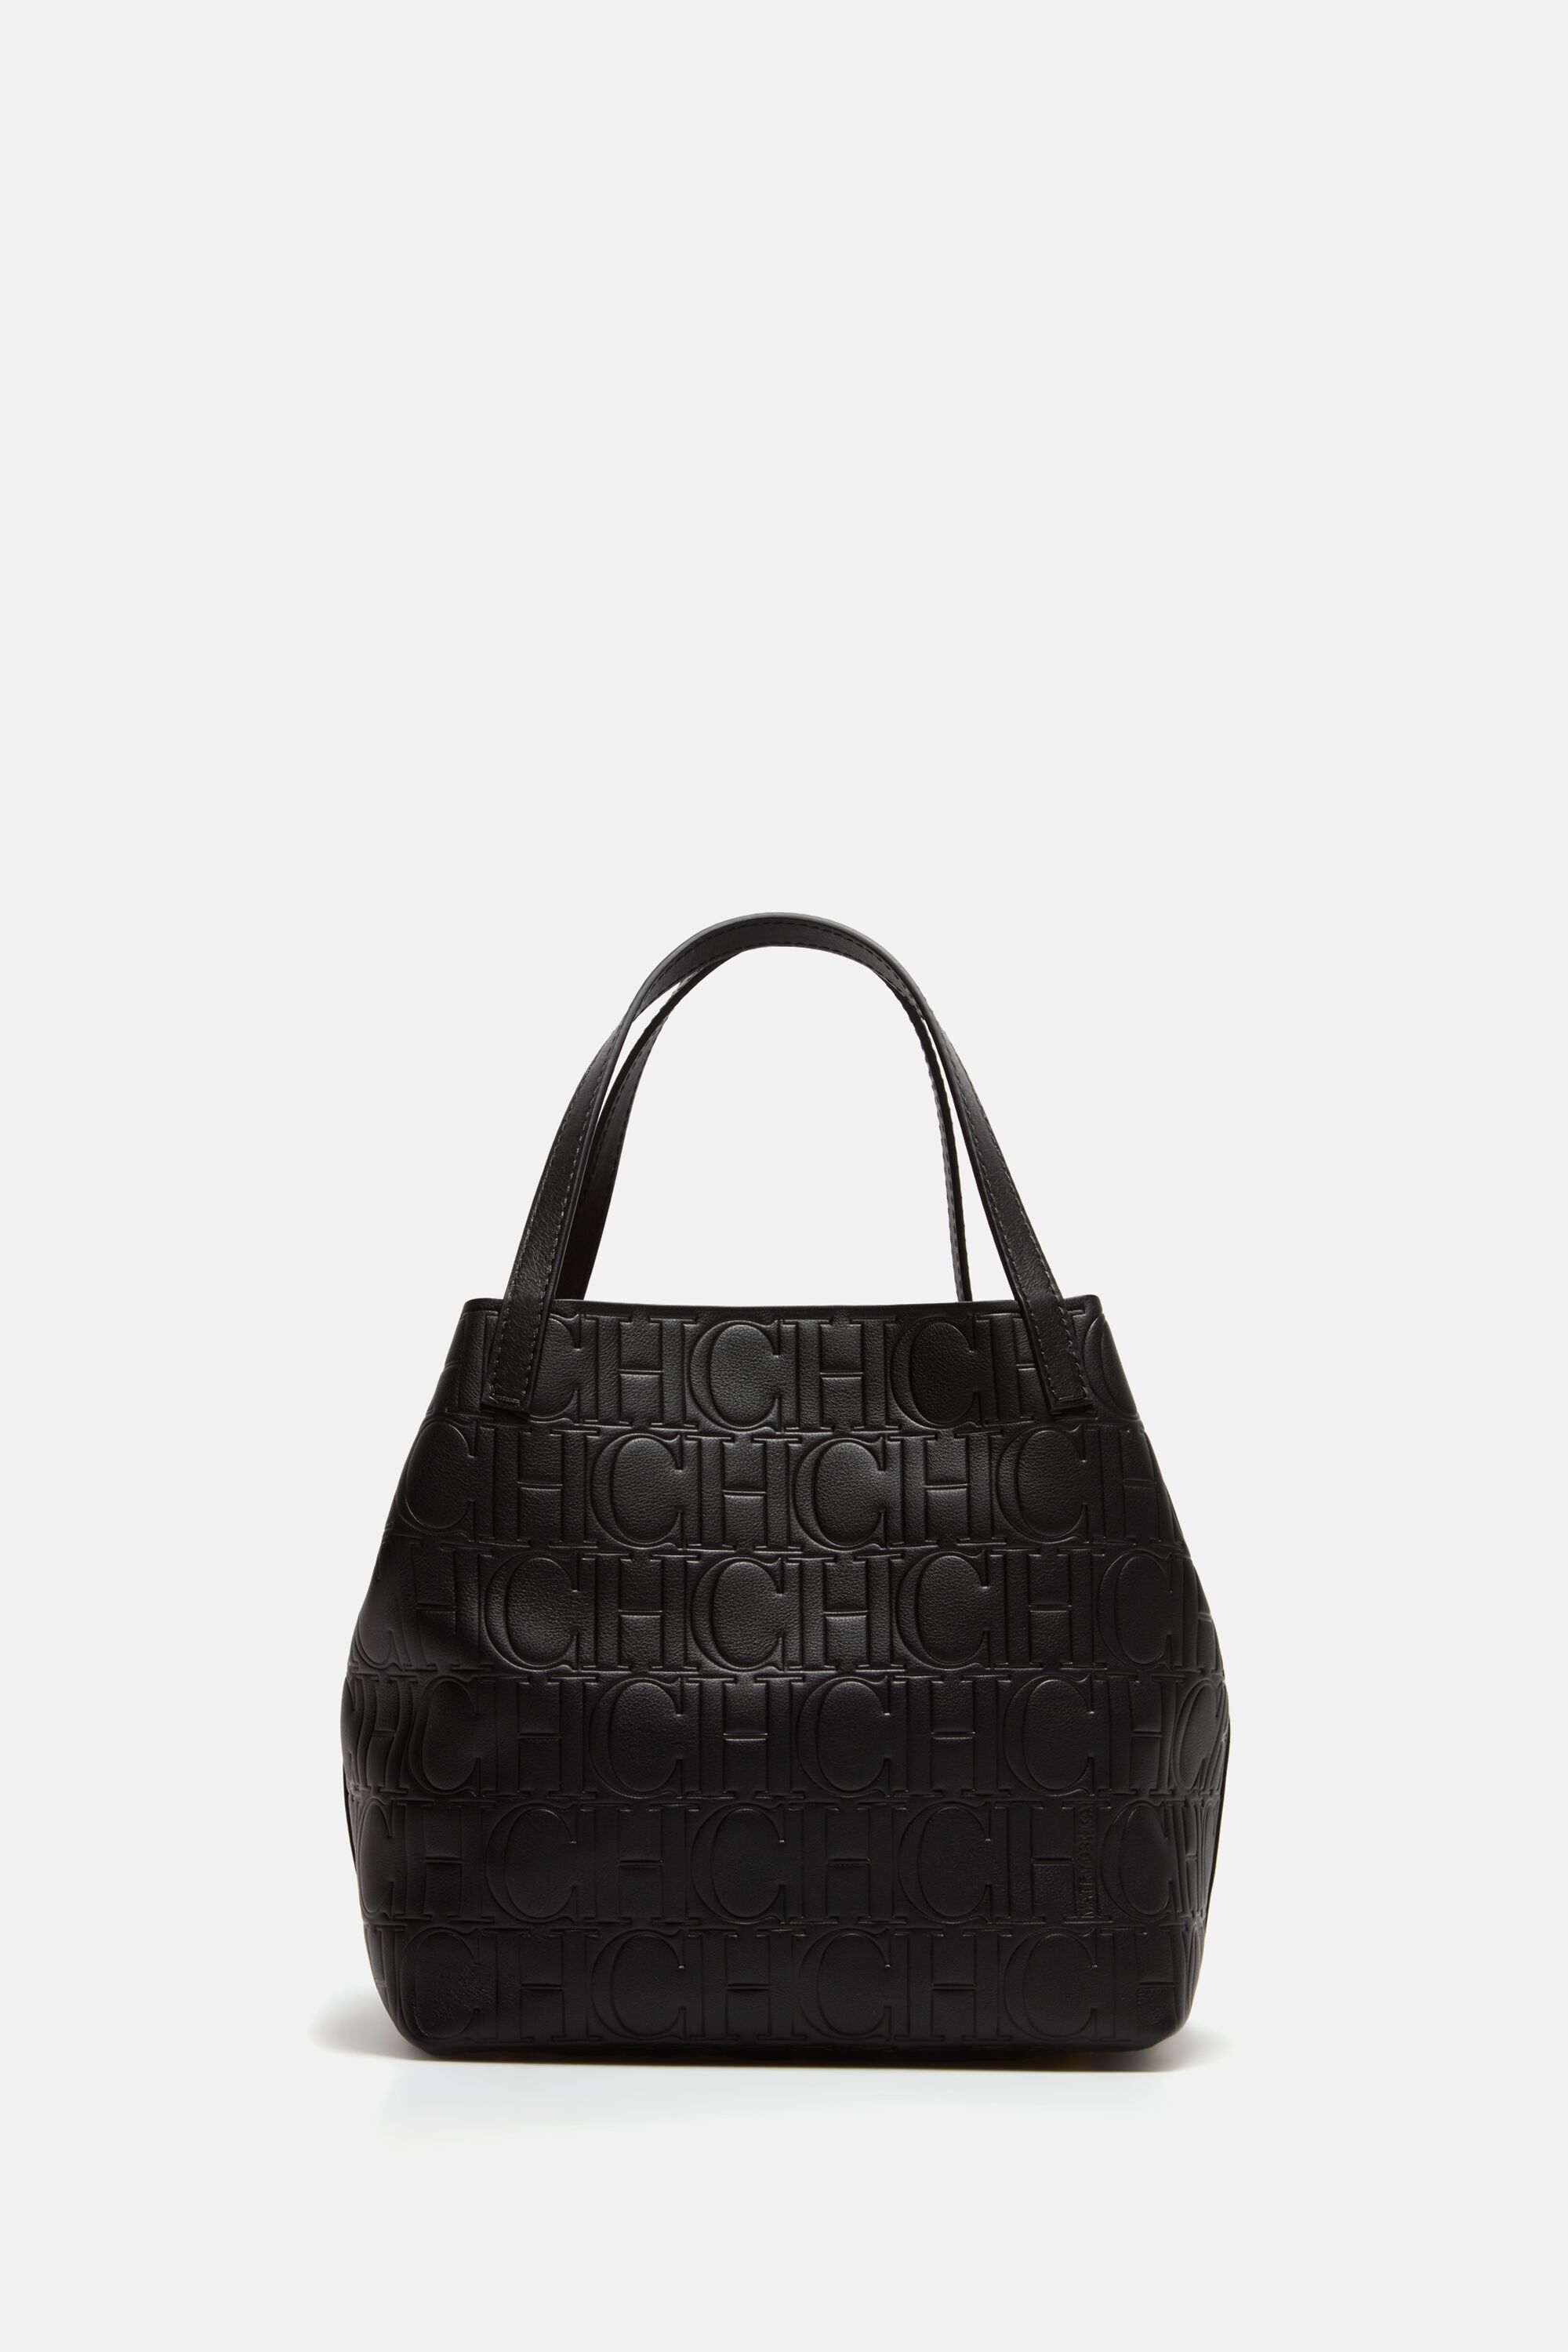 Carolina Herrera Black Leather MATRYOSHKA CH Handbag